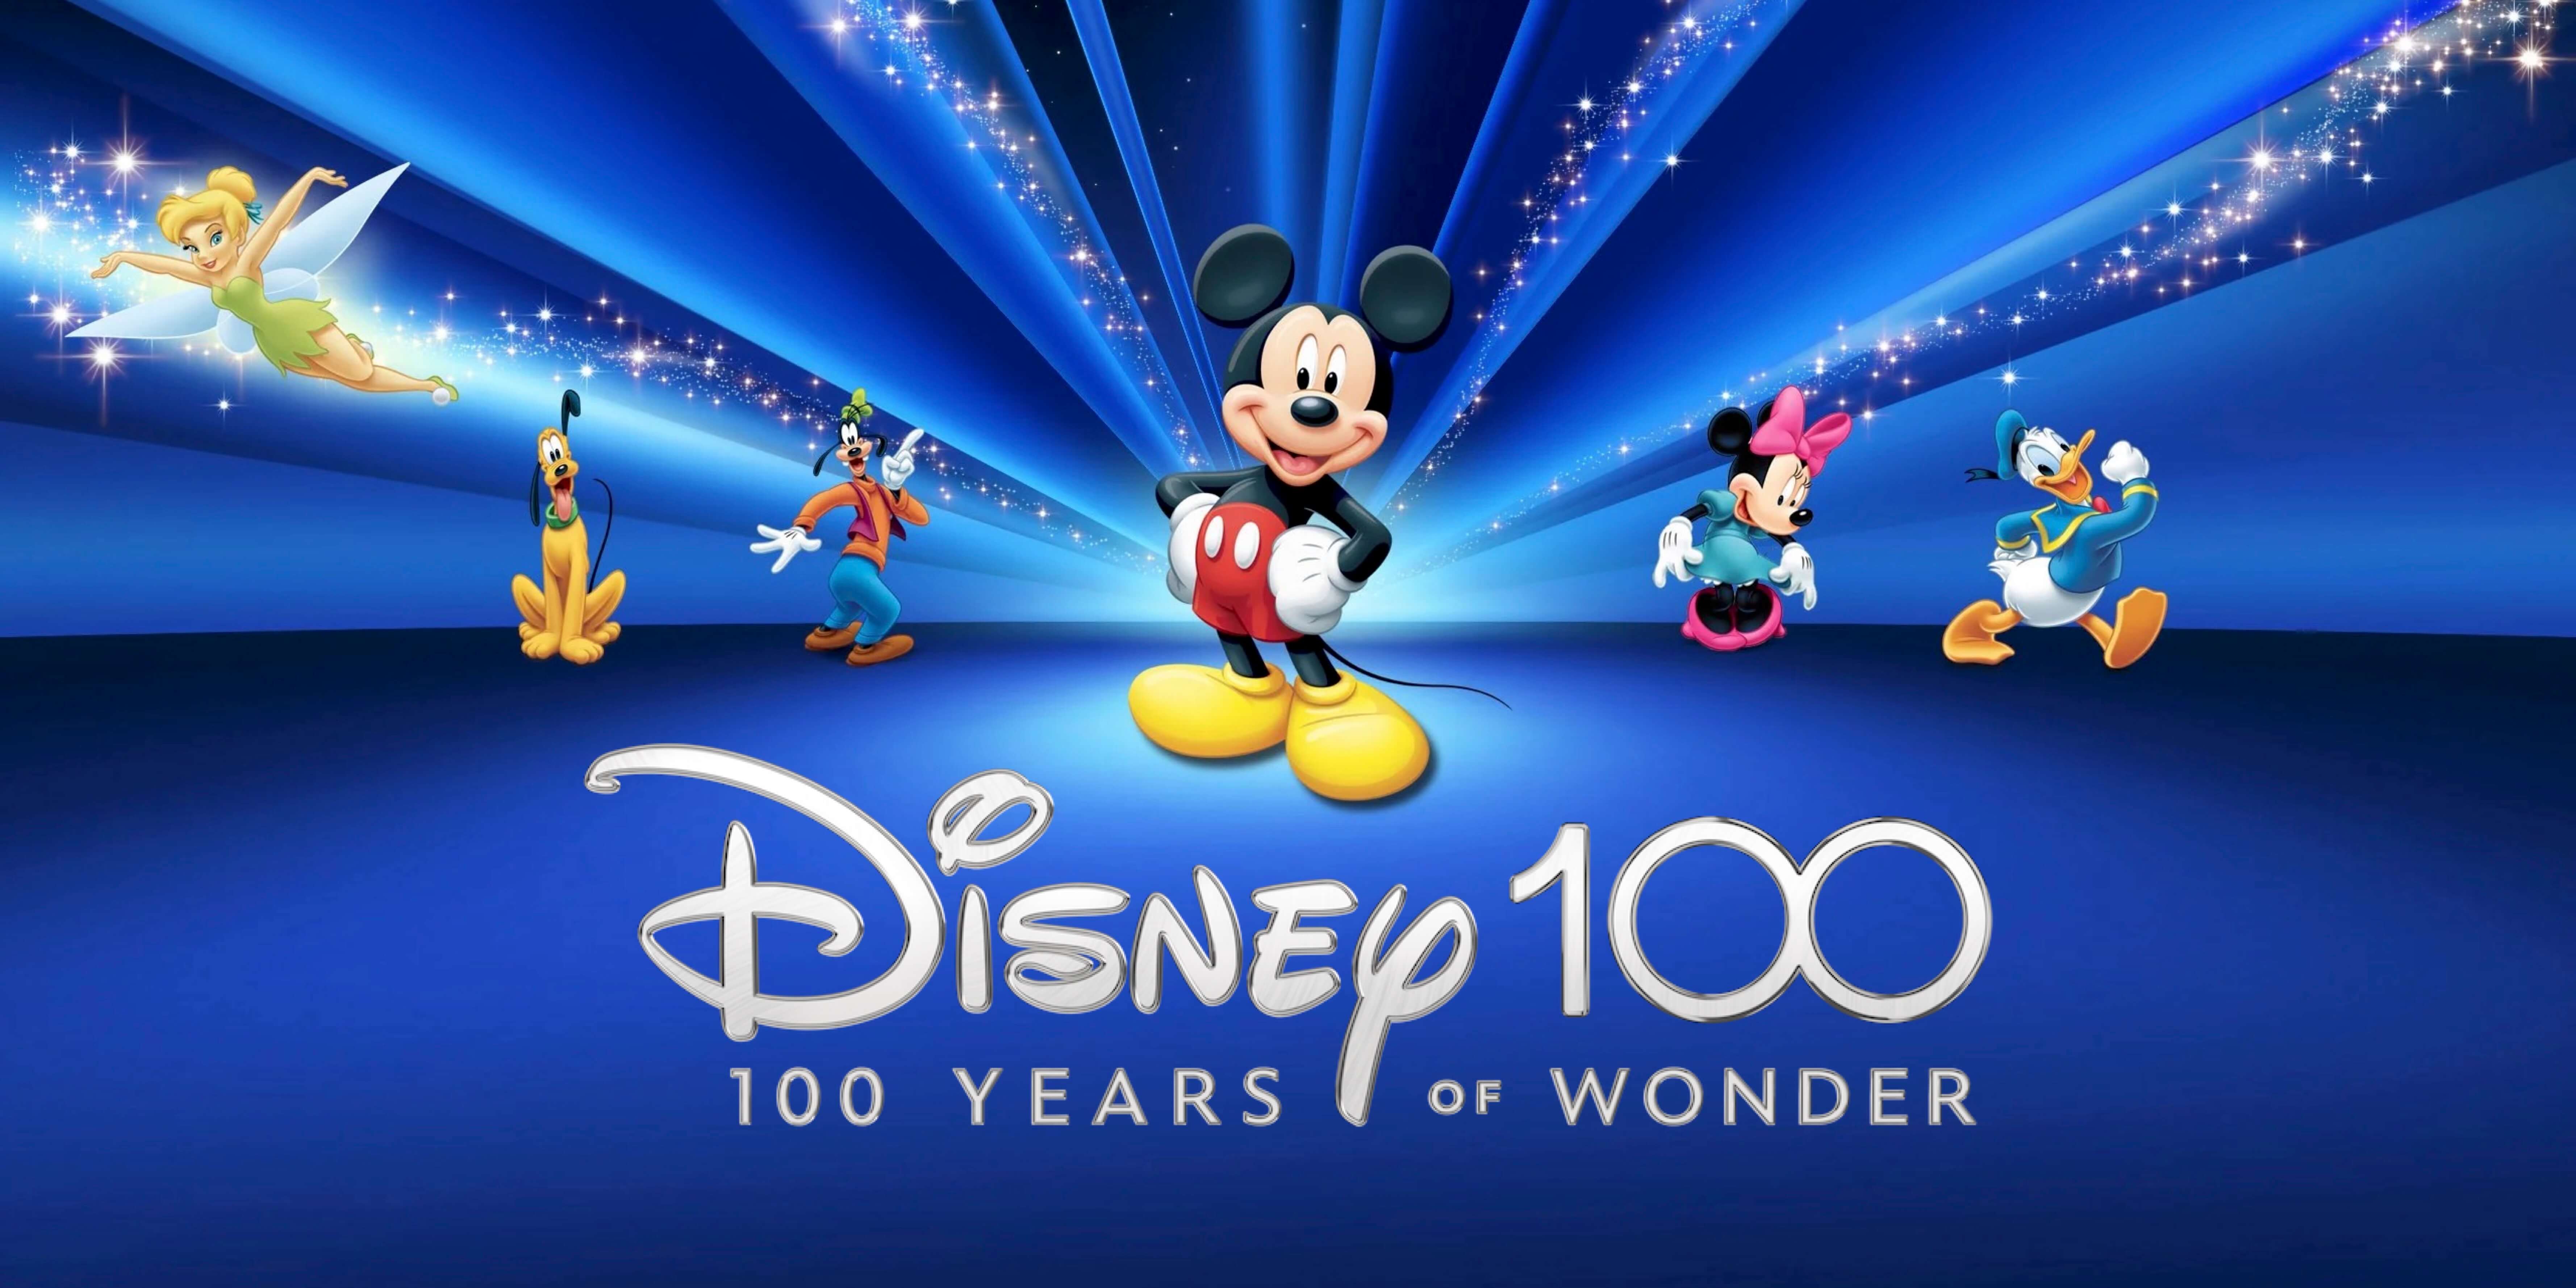 Disney 100 years